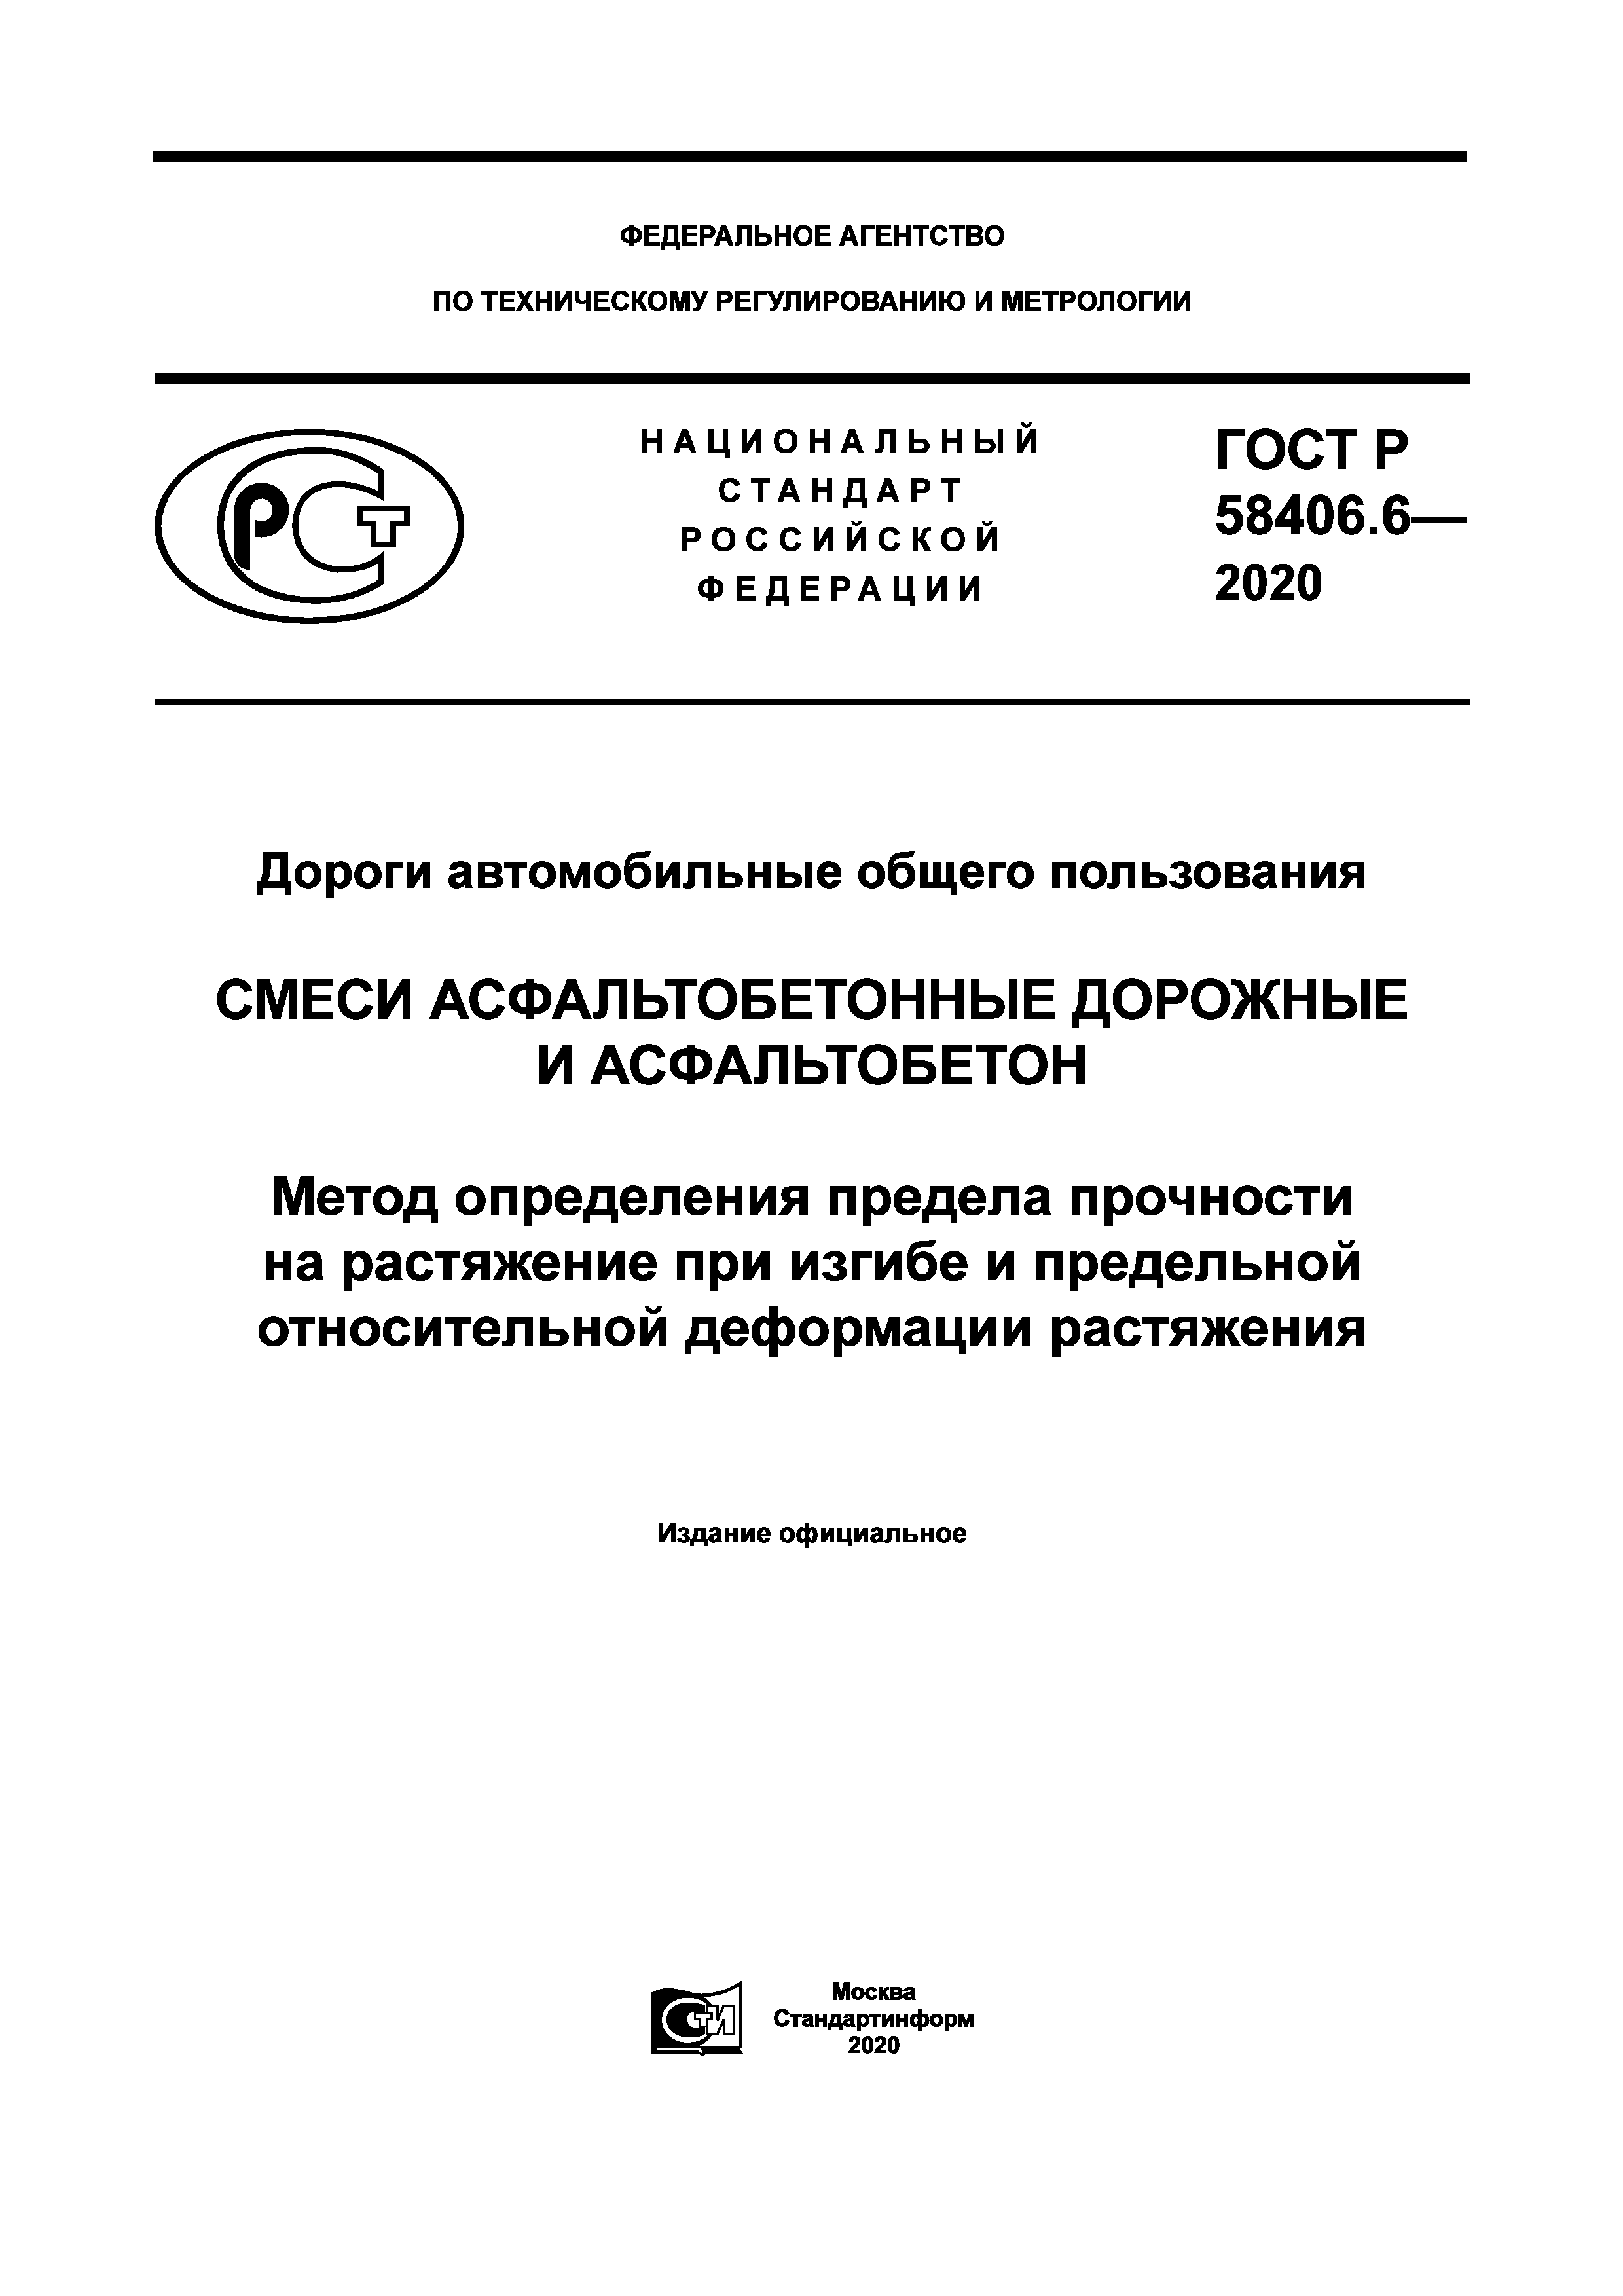 ГОСТ Р 58406.6-2020